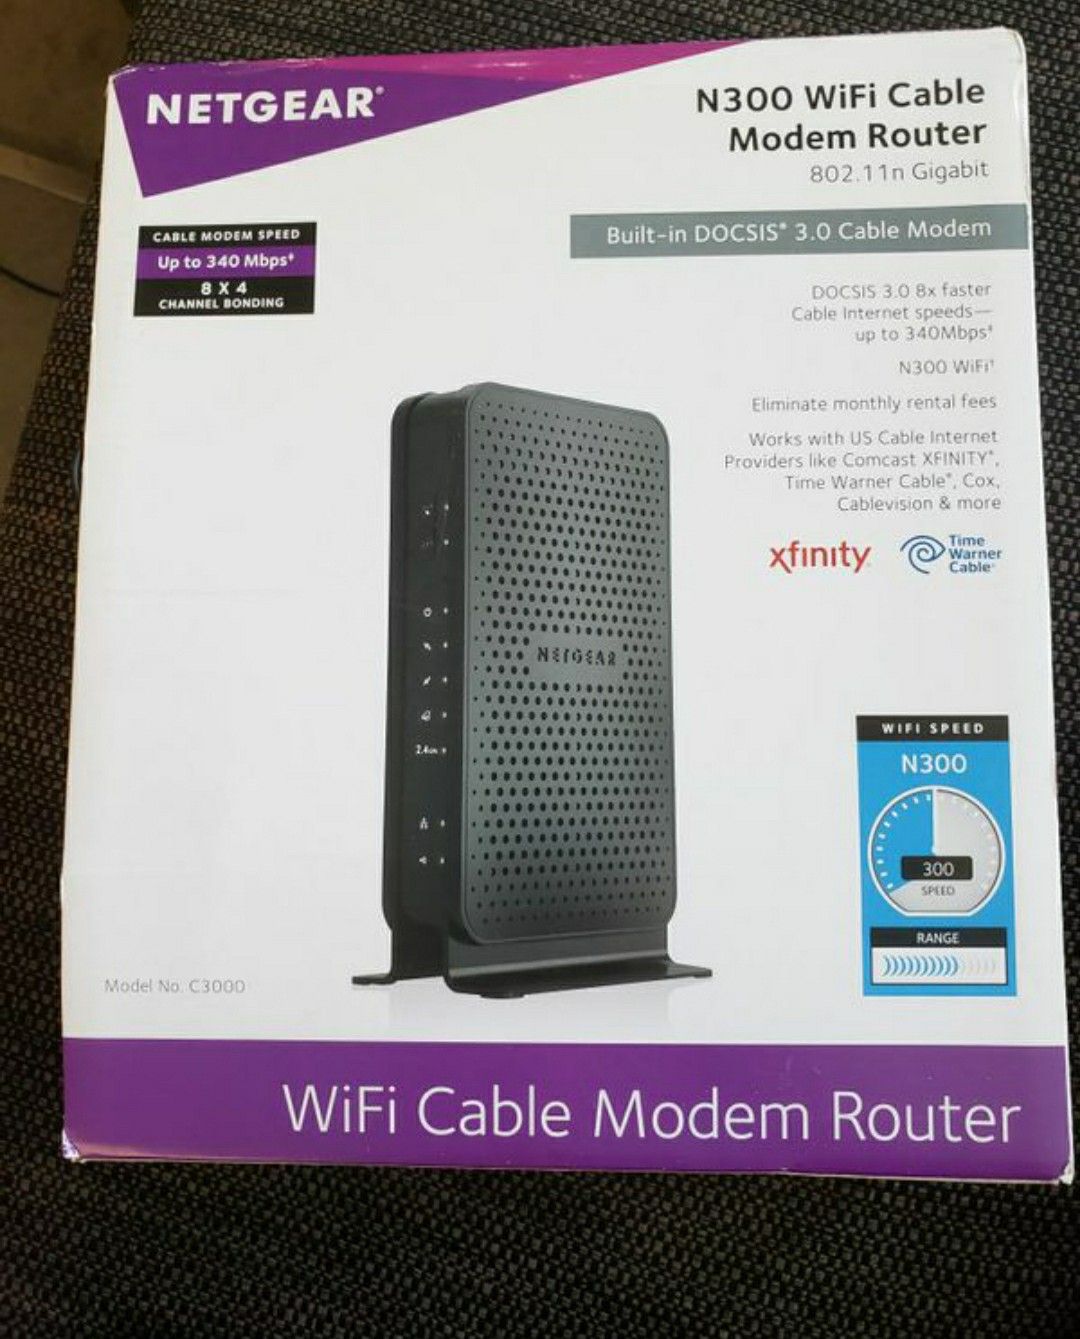 NETGEAR N300 WiFi Cable Modem Router